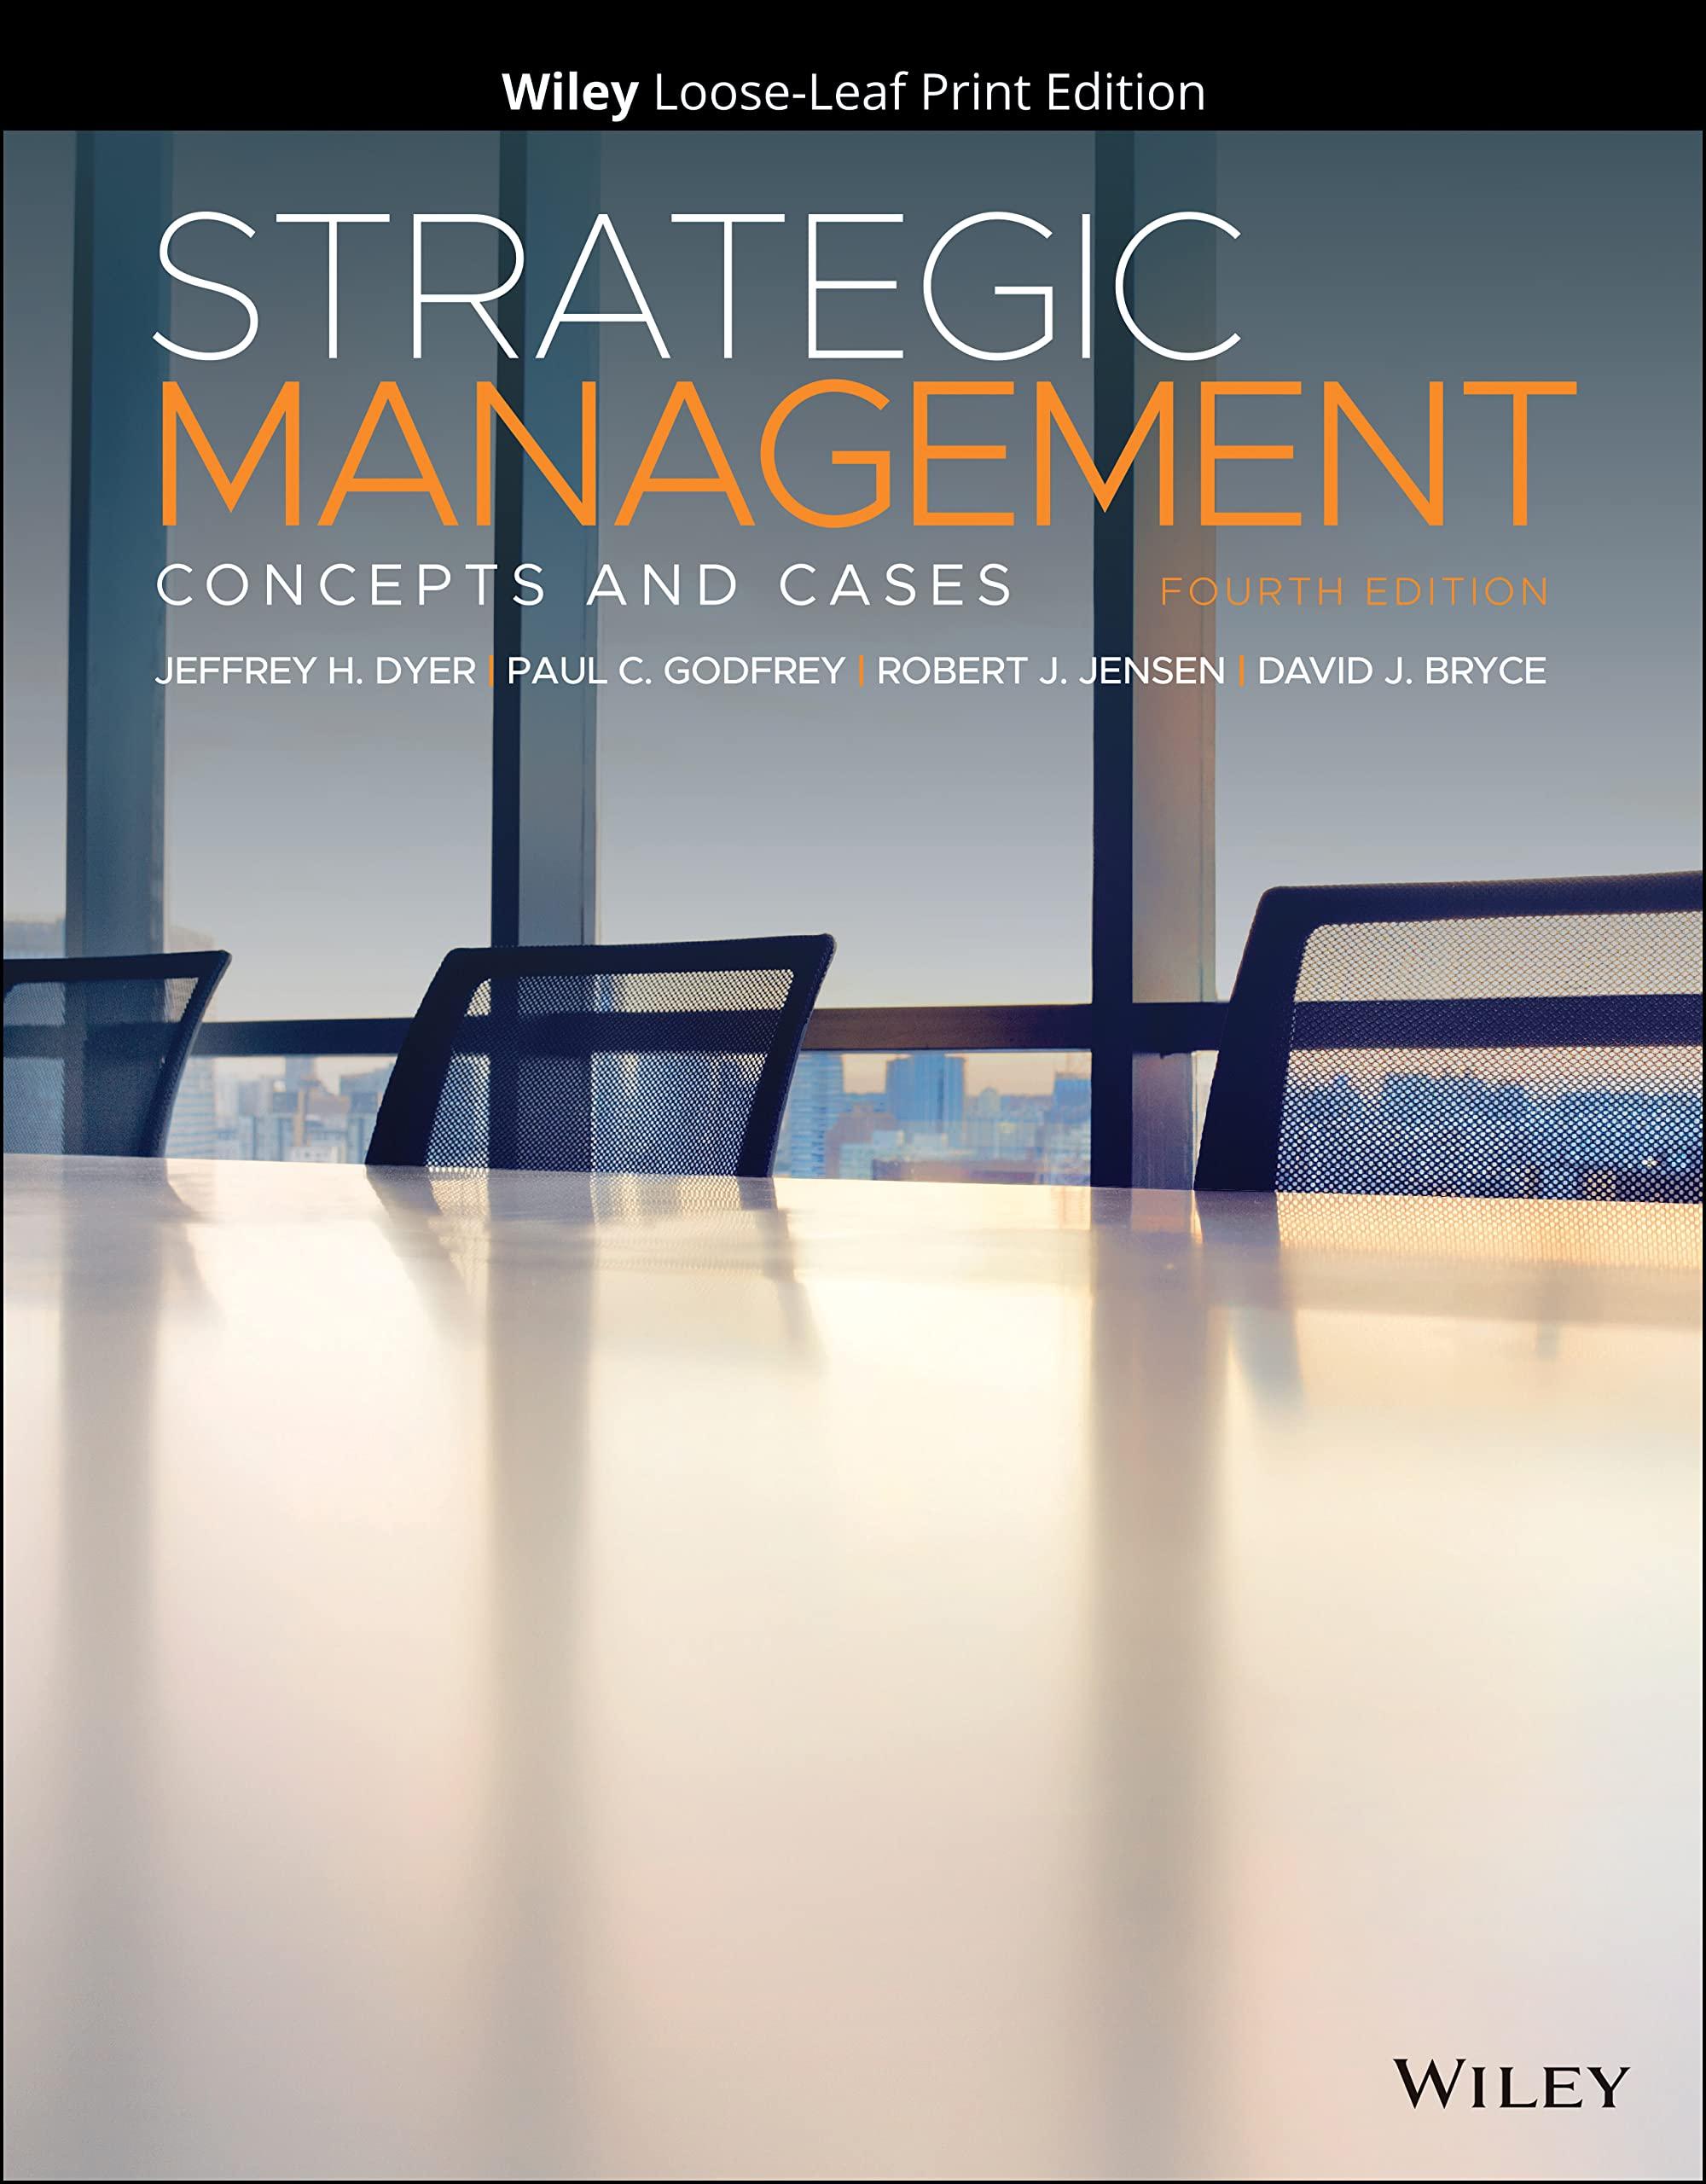 strategic management concepts and cases 4th edition jeffrey h. dyer, paul c. godfrey, robert j. jensen, david